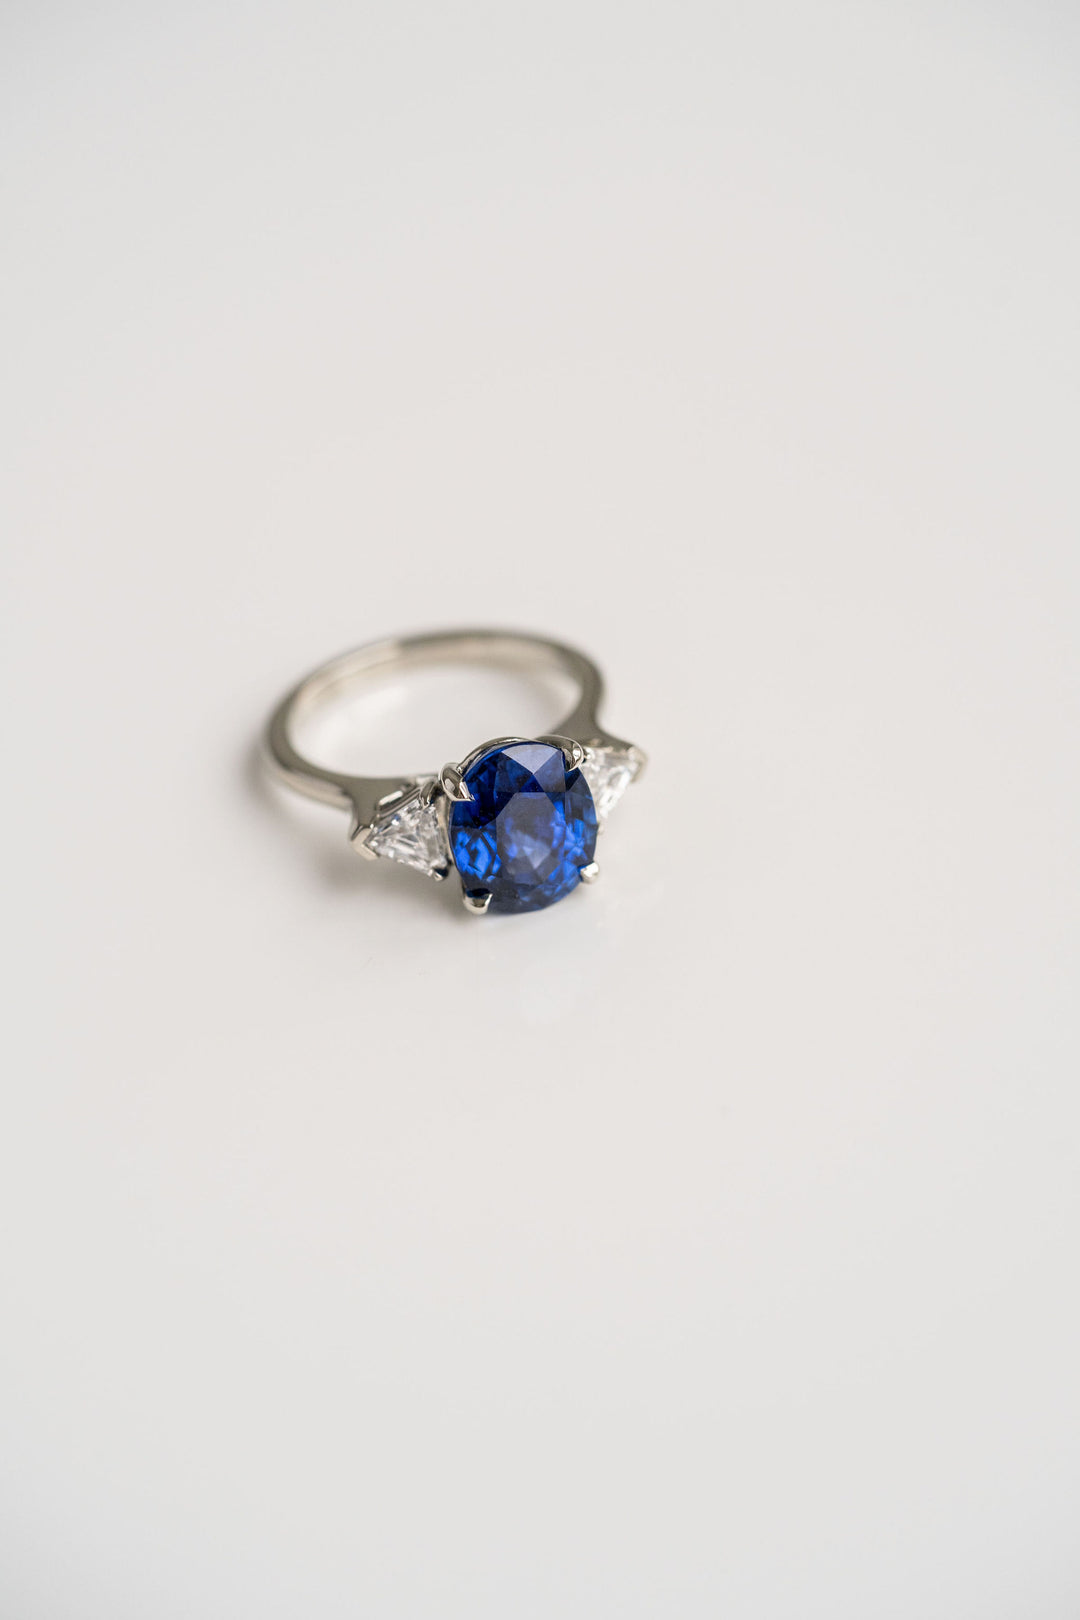 5.06ct. Blue Oval Sri Lankan Sapphire With Shield Shape Diamond Accents, 14k White Gold